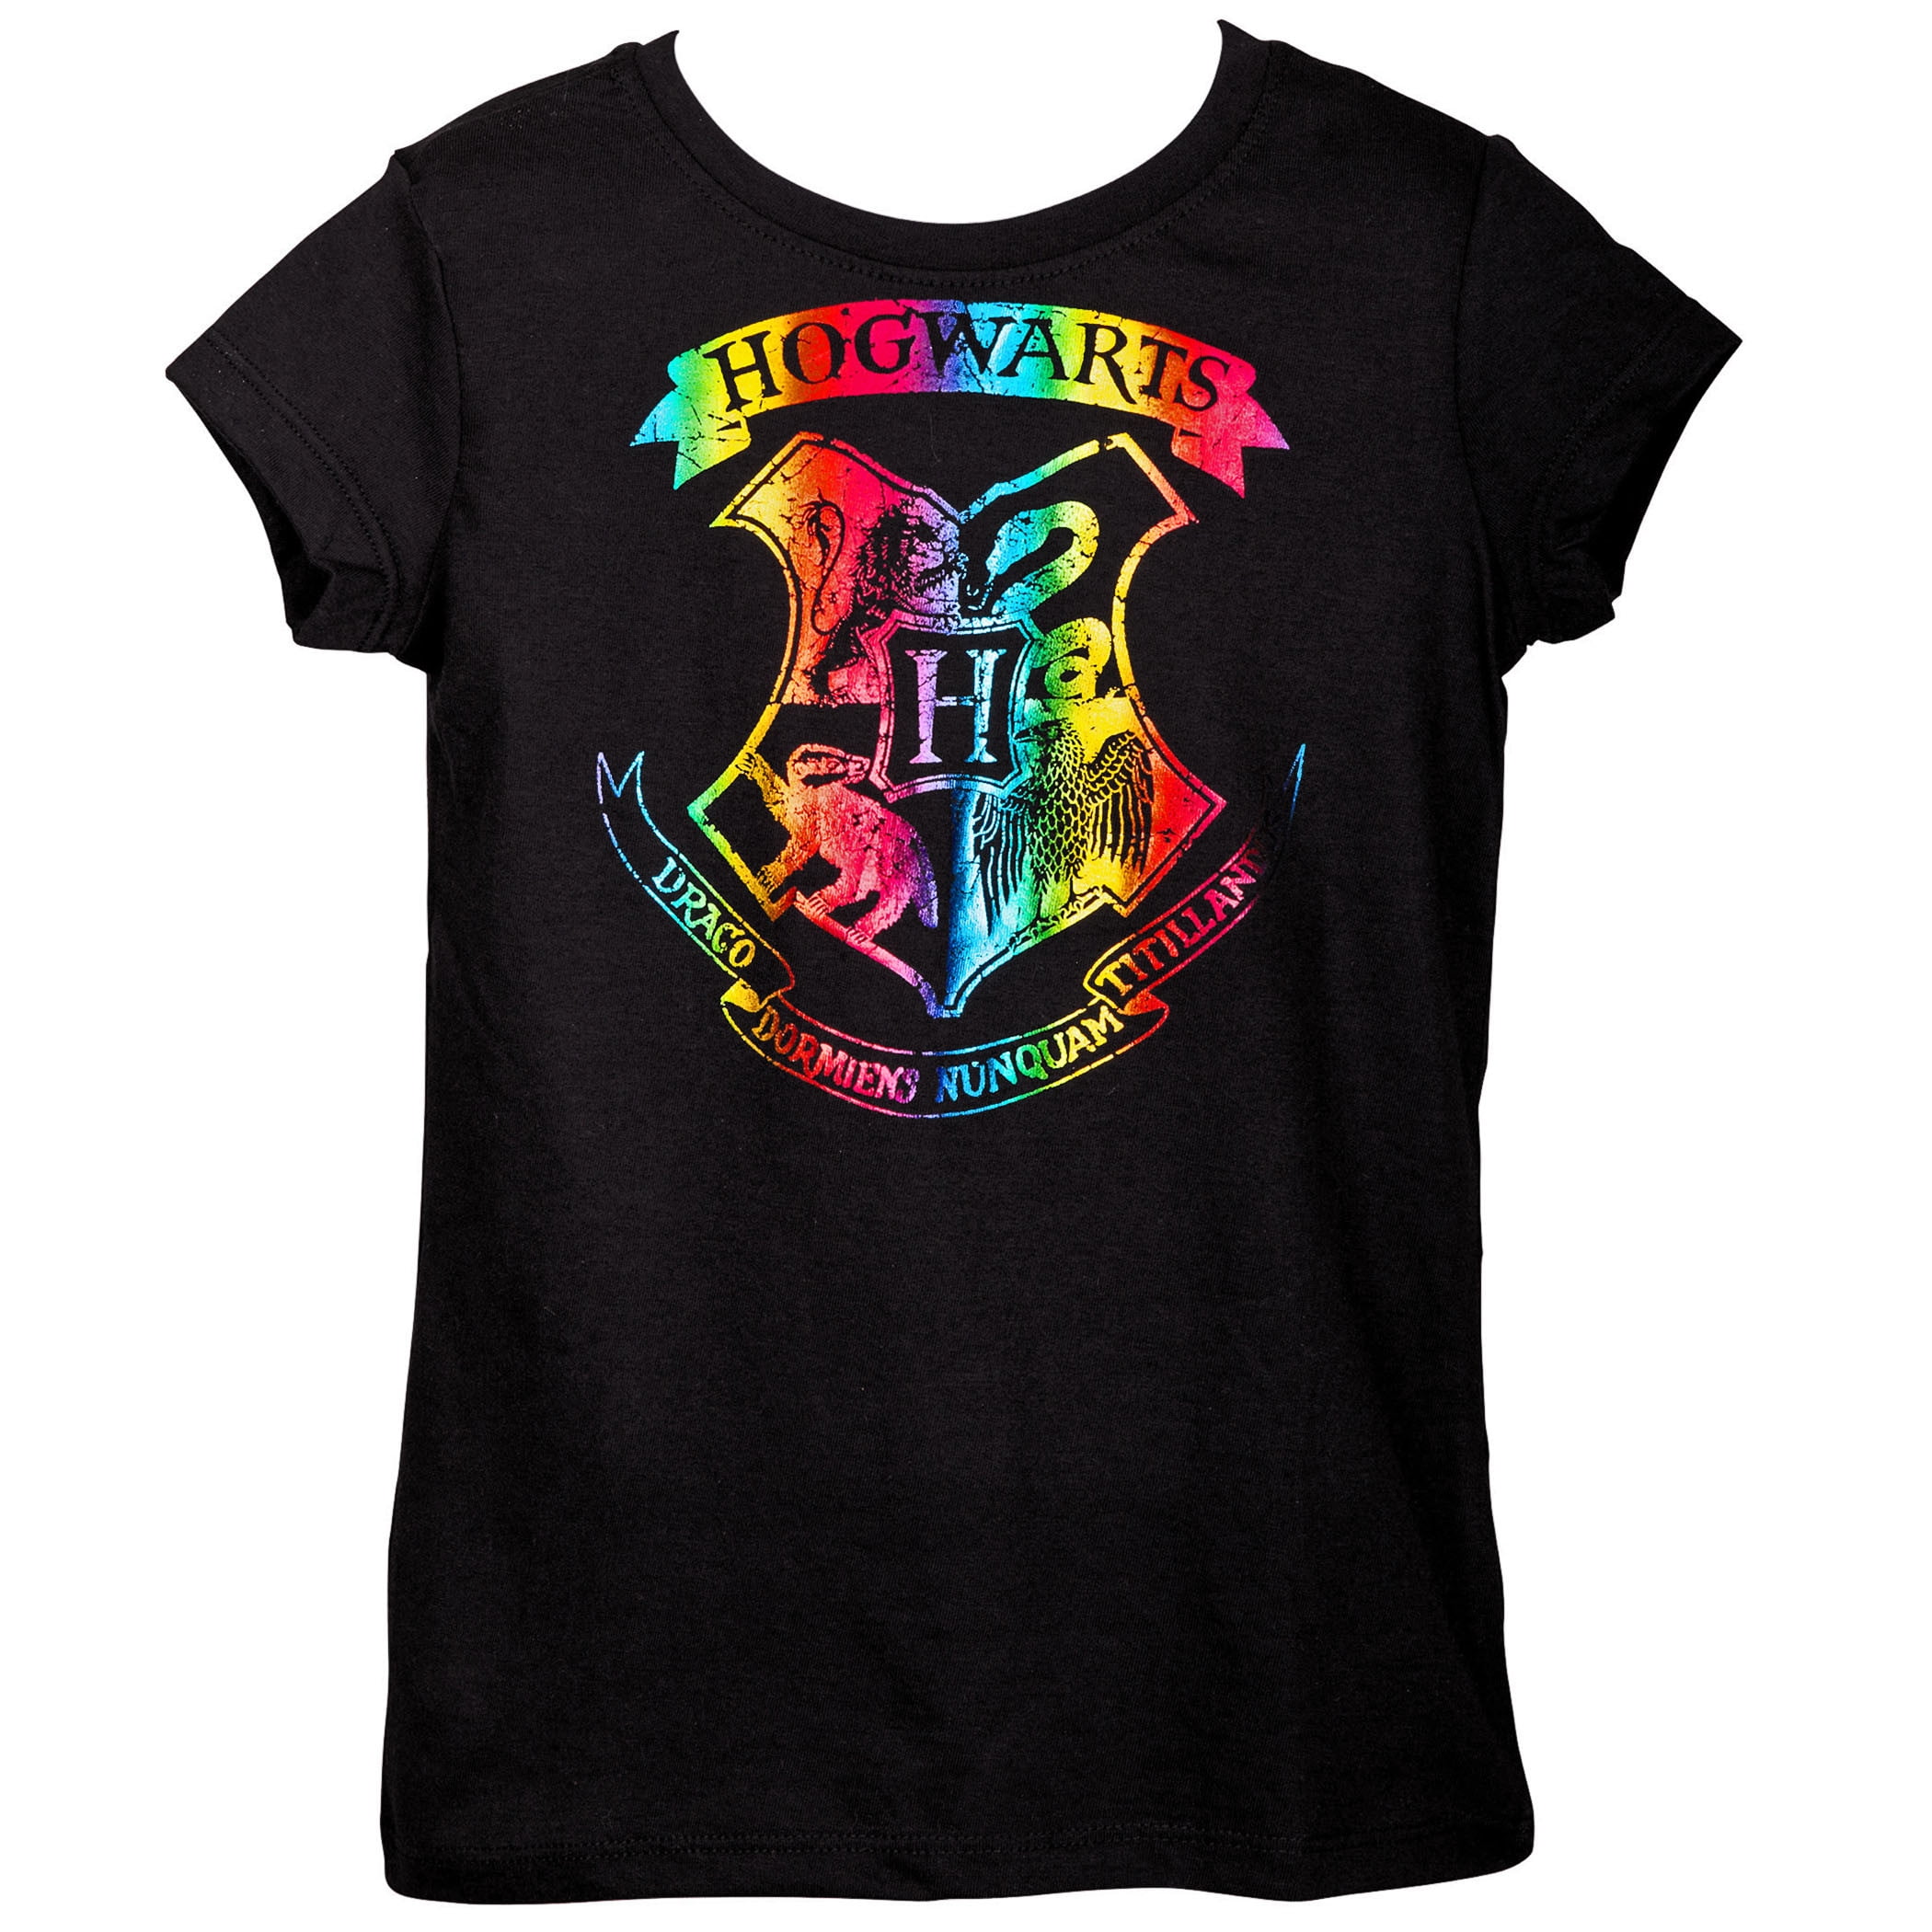  Harry  Potter  Harry  Potter  Hogwarts Girls Youth T Shirt  